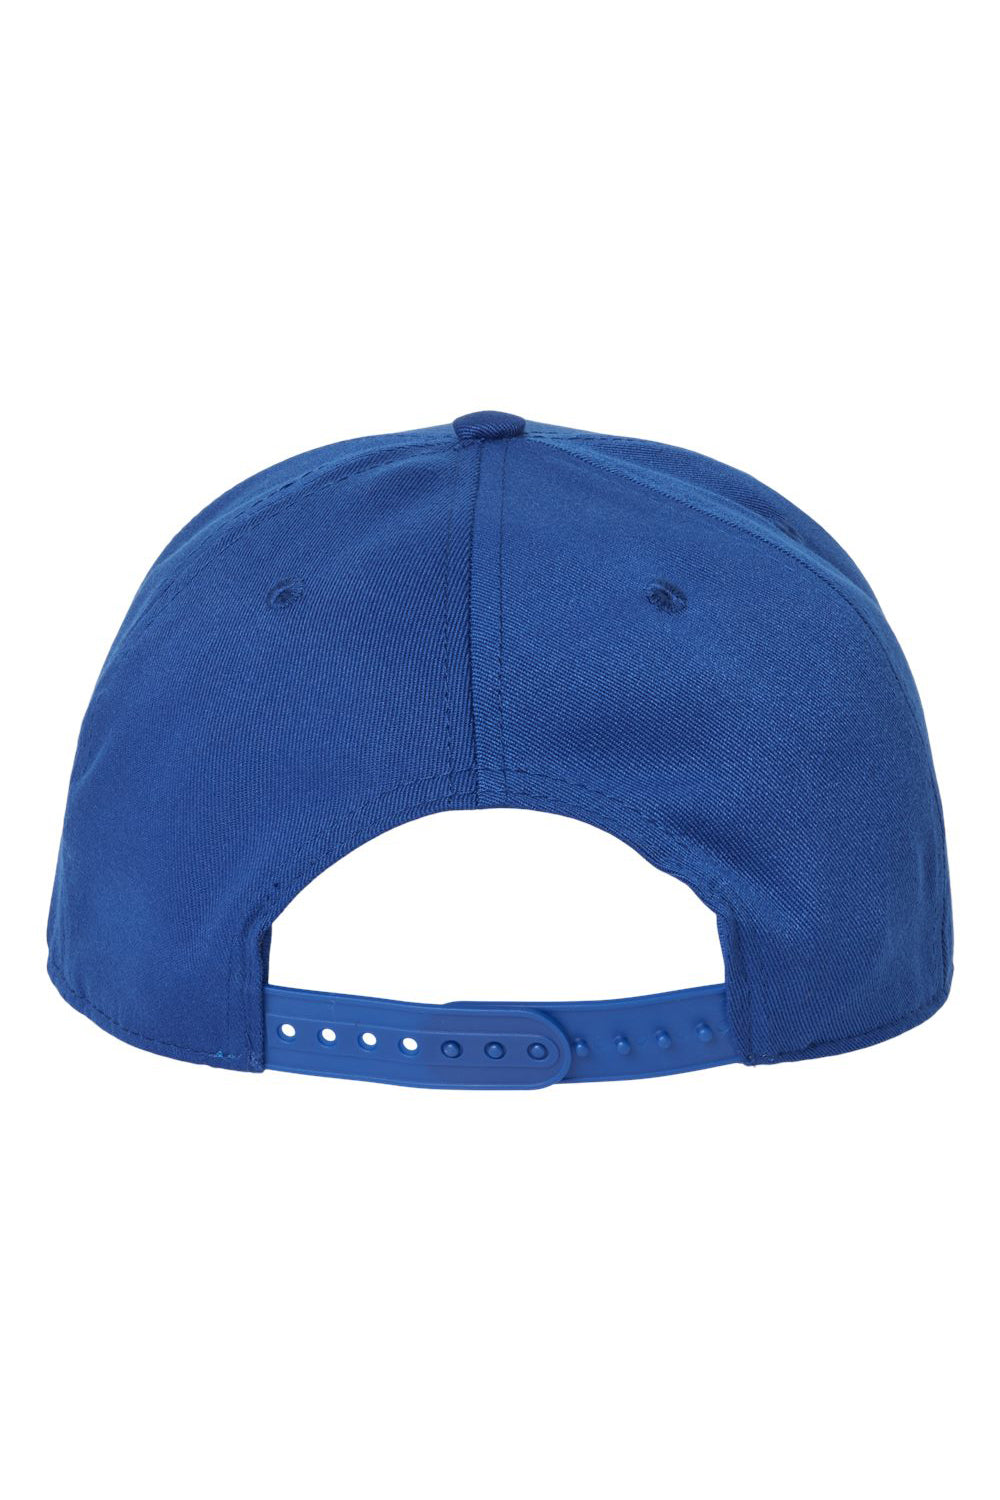 Atlantis Headwear JAMES Mens Sustainable Flat Bill Snapback Hat Royal Blue Flat Back